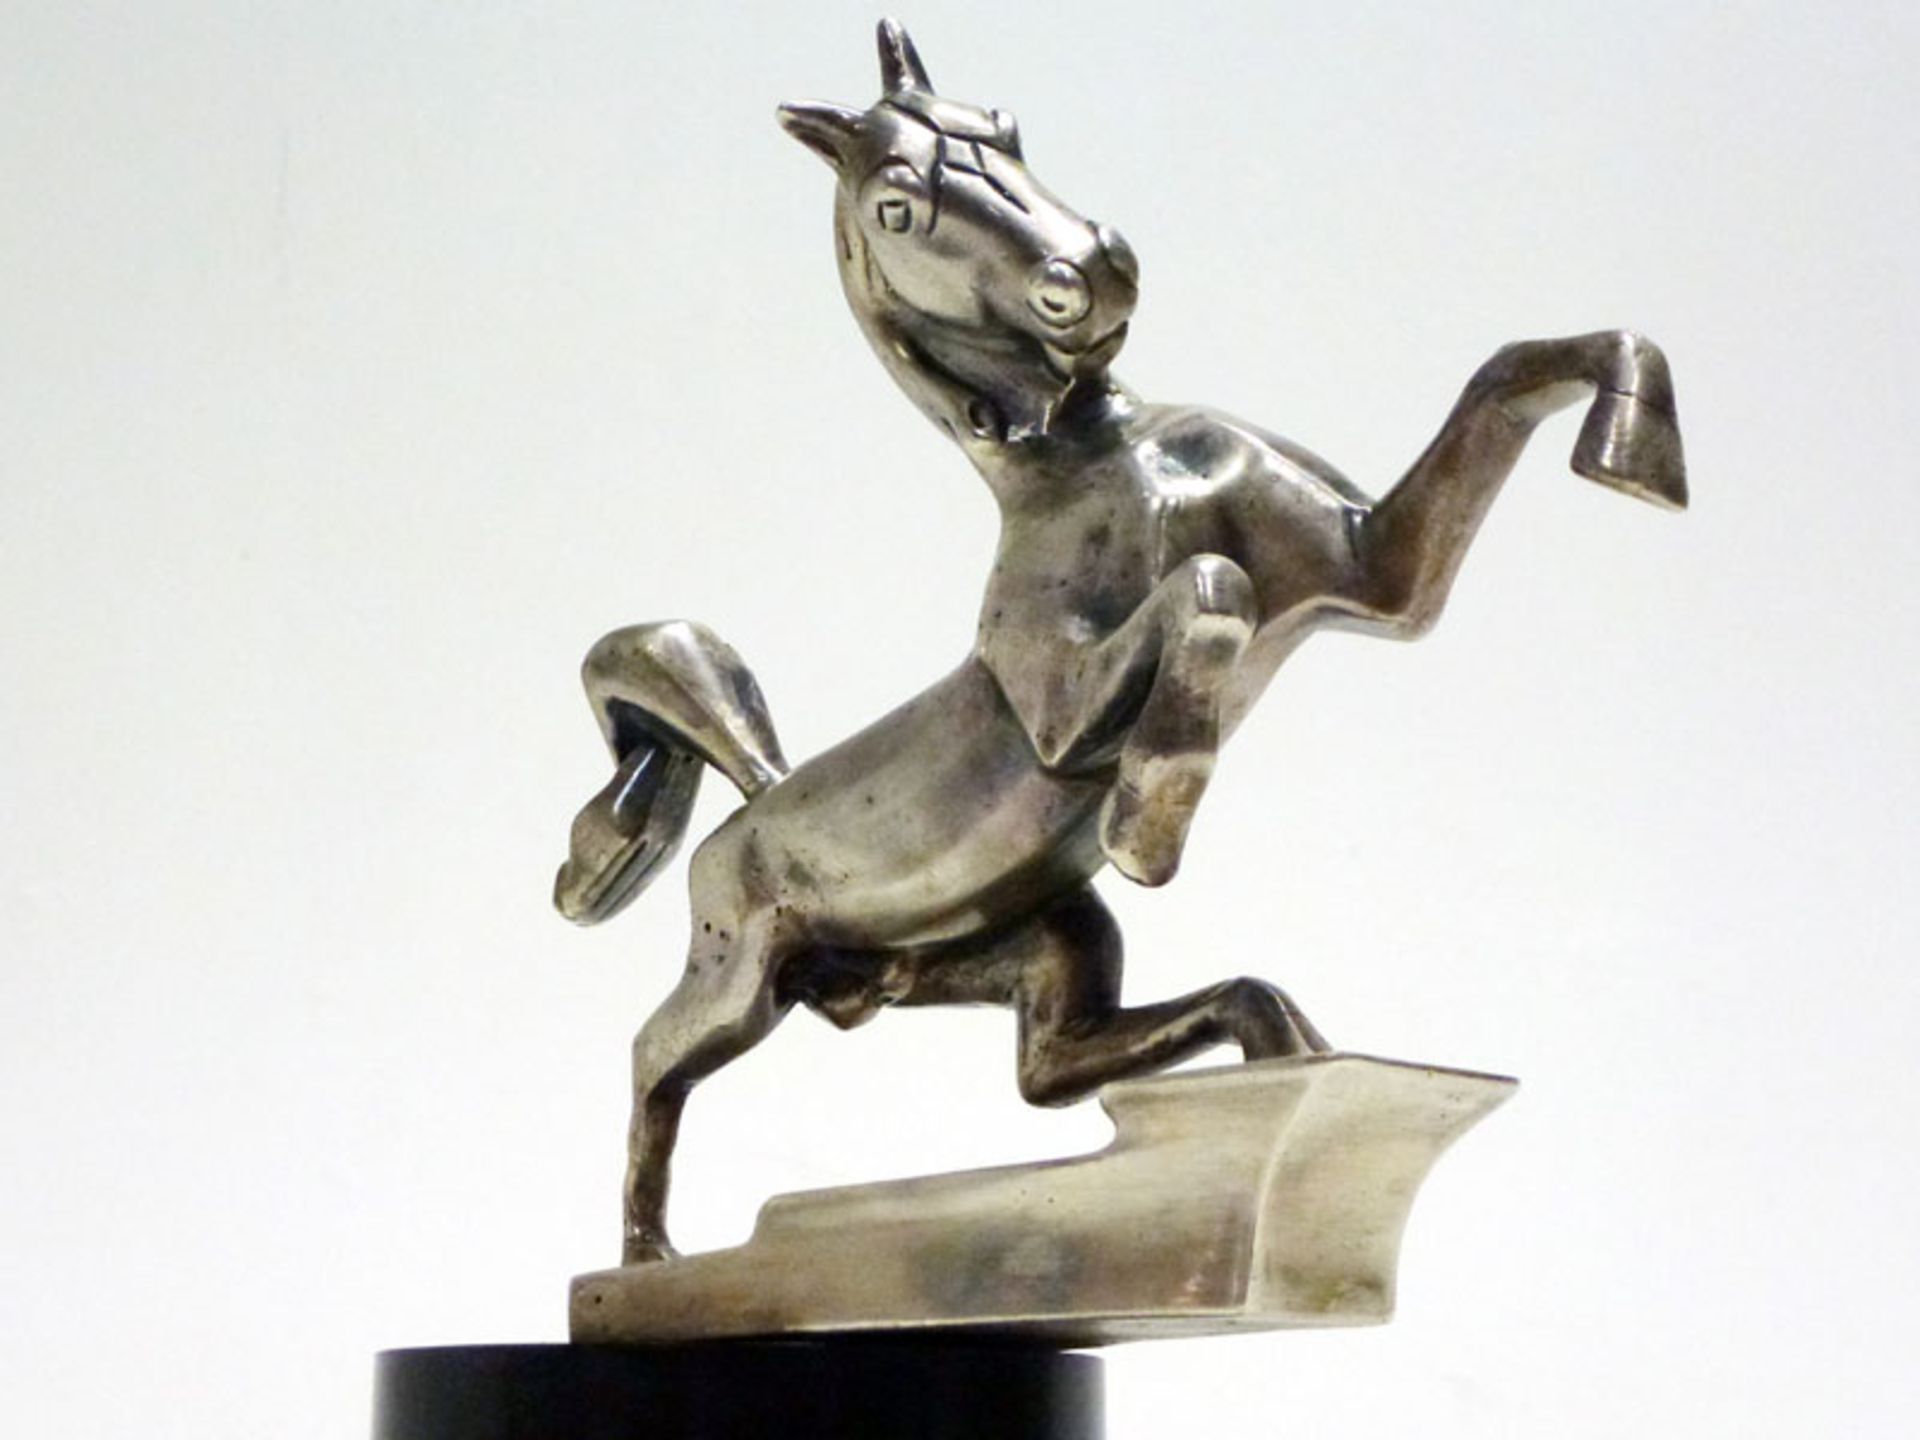 Humber 'Imperial Horse' Mascot